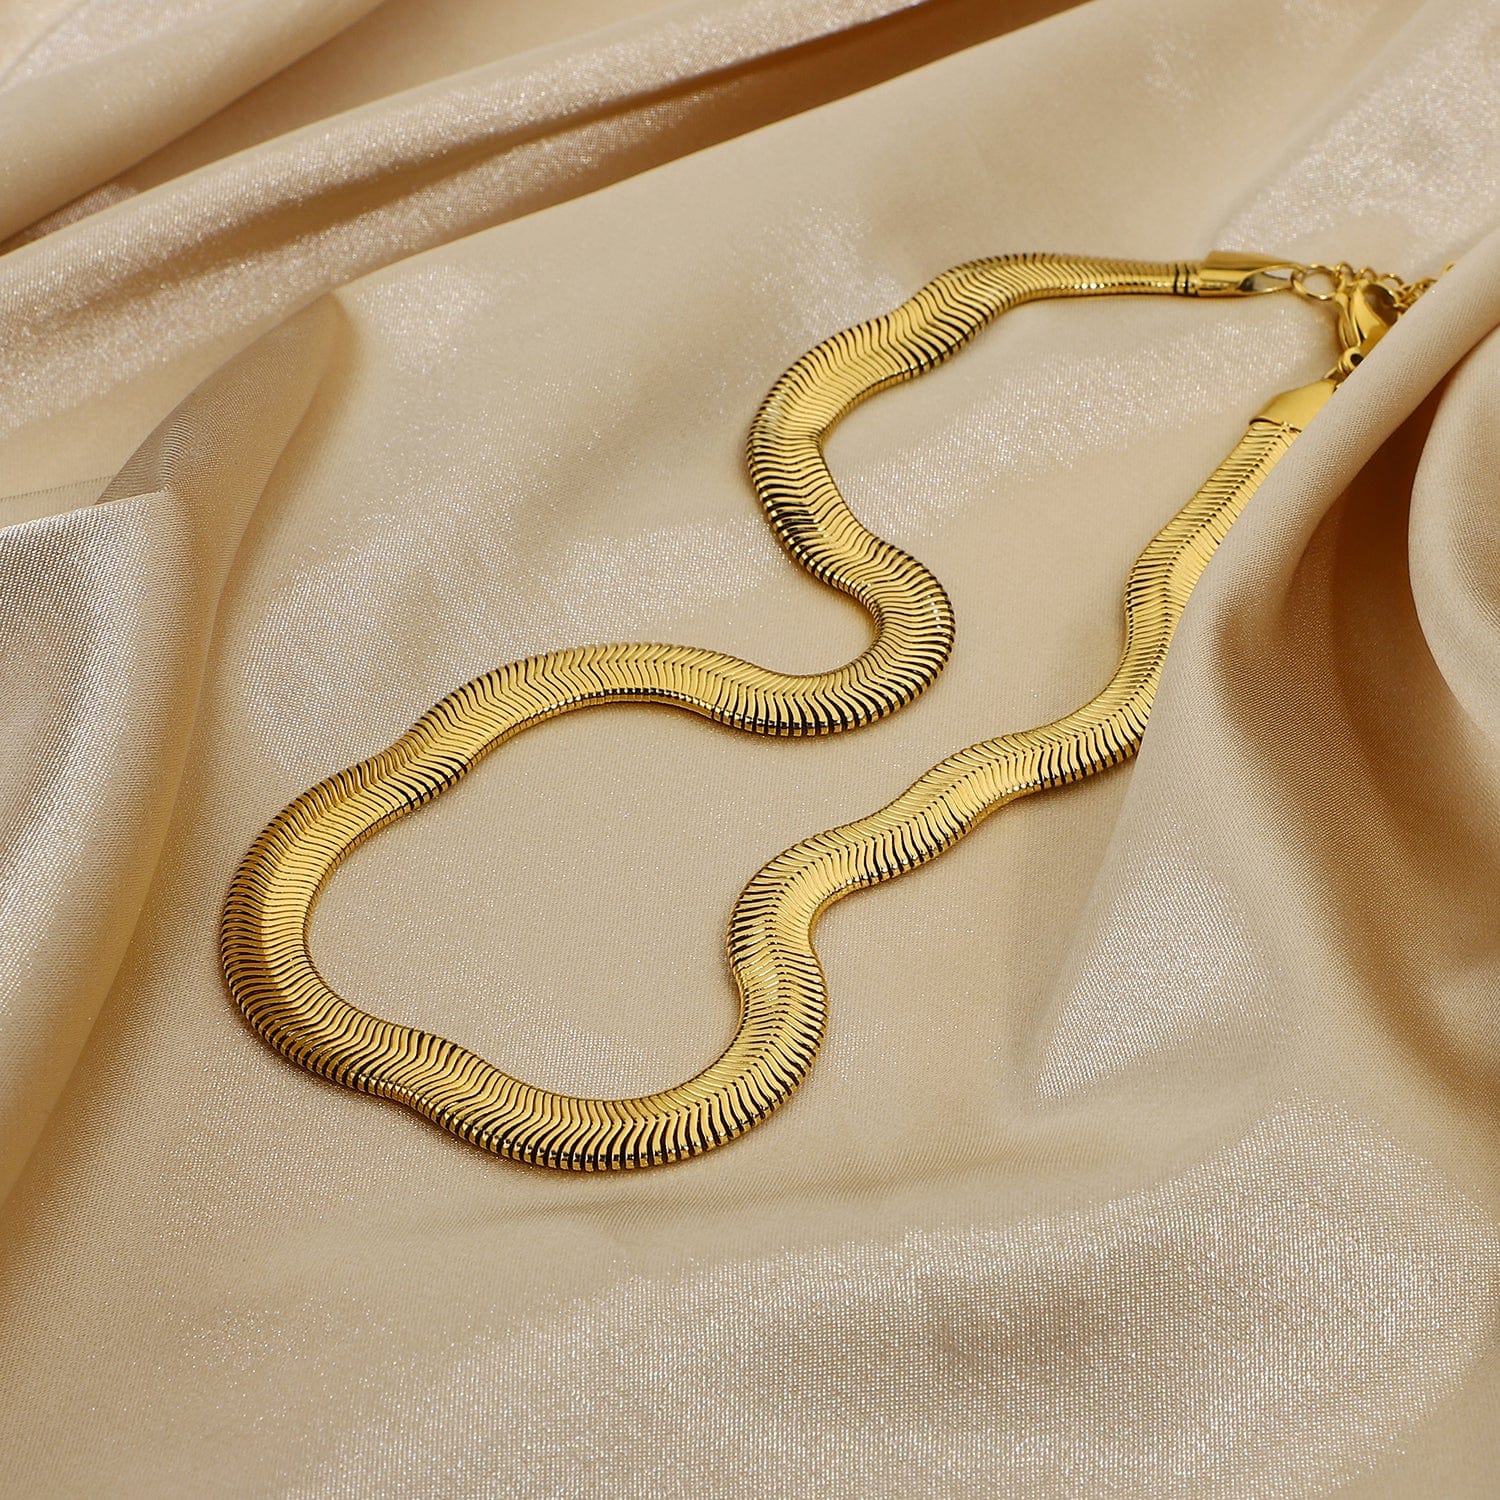 Statement Snake Necklace